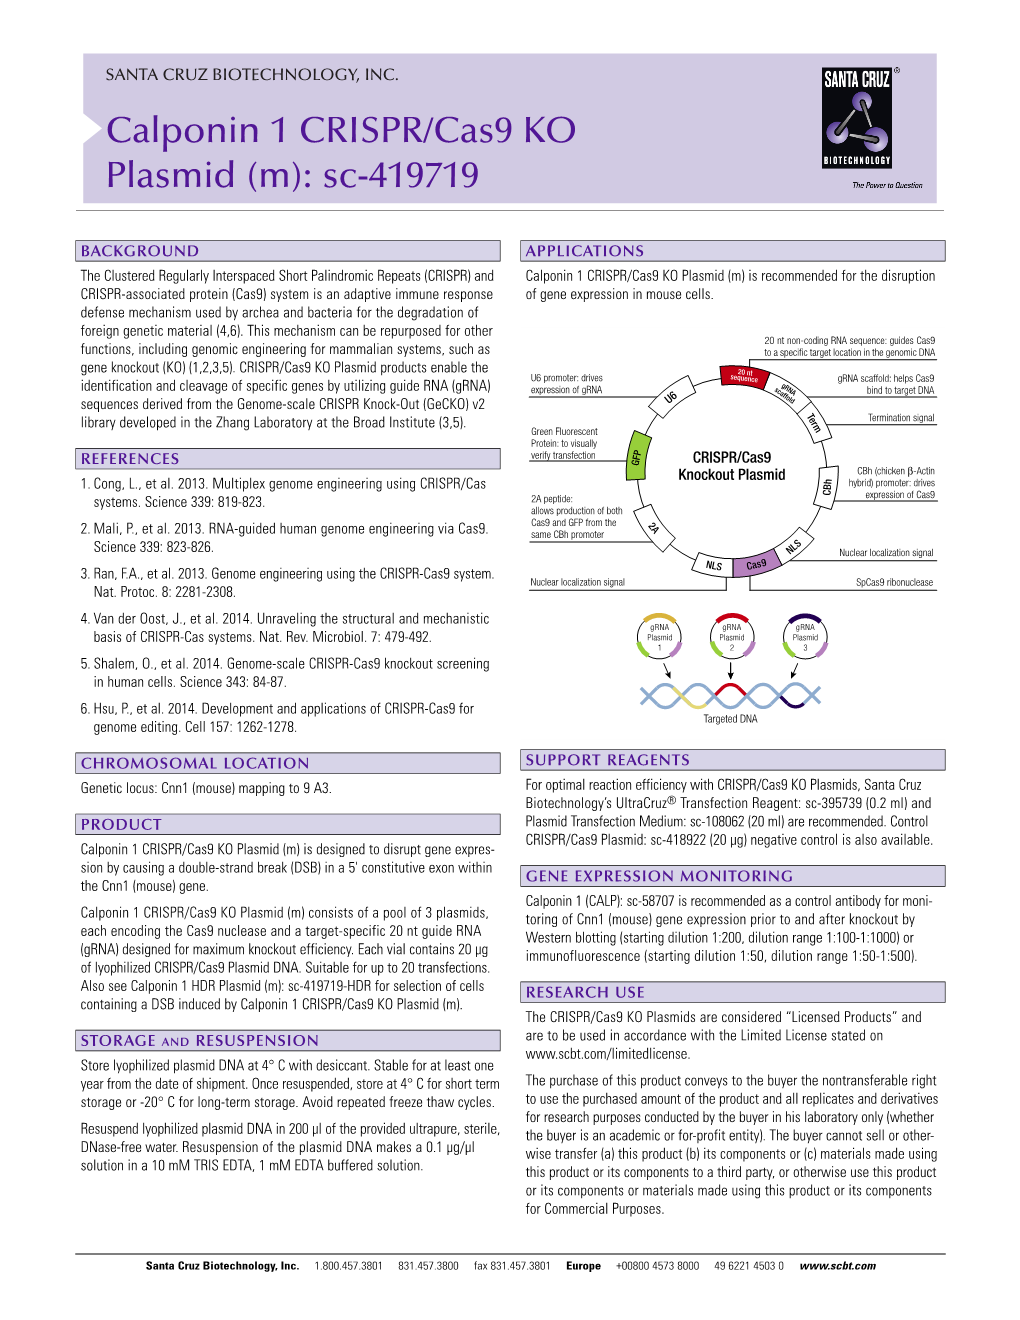 Calponin 1 CRISPR/Cas9 KO Plasmid (M): Sc-419719